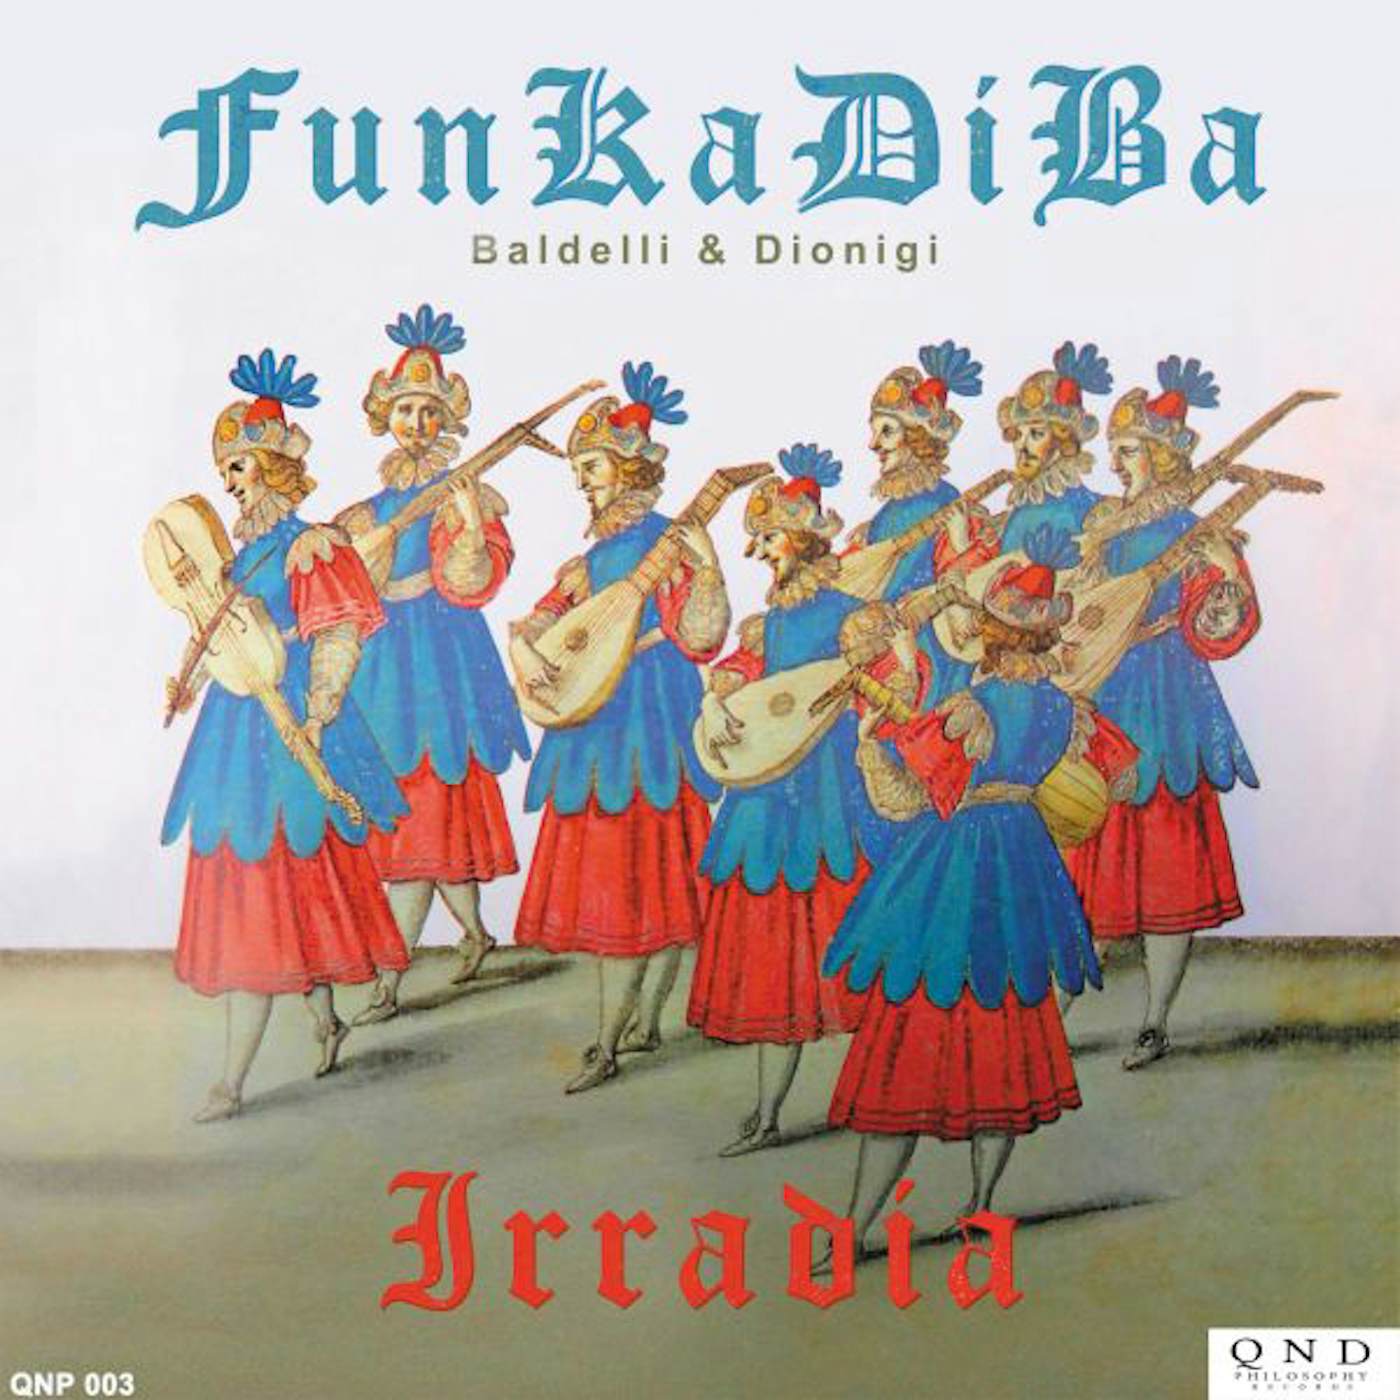 Daniele Baldelli & Marco Dionigi IRRADIA Vinyl Record